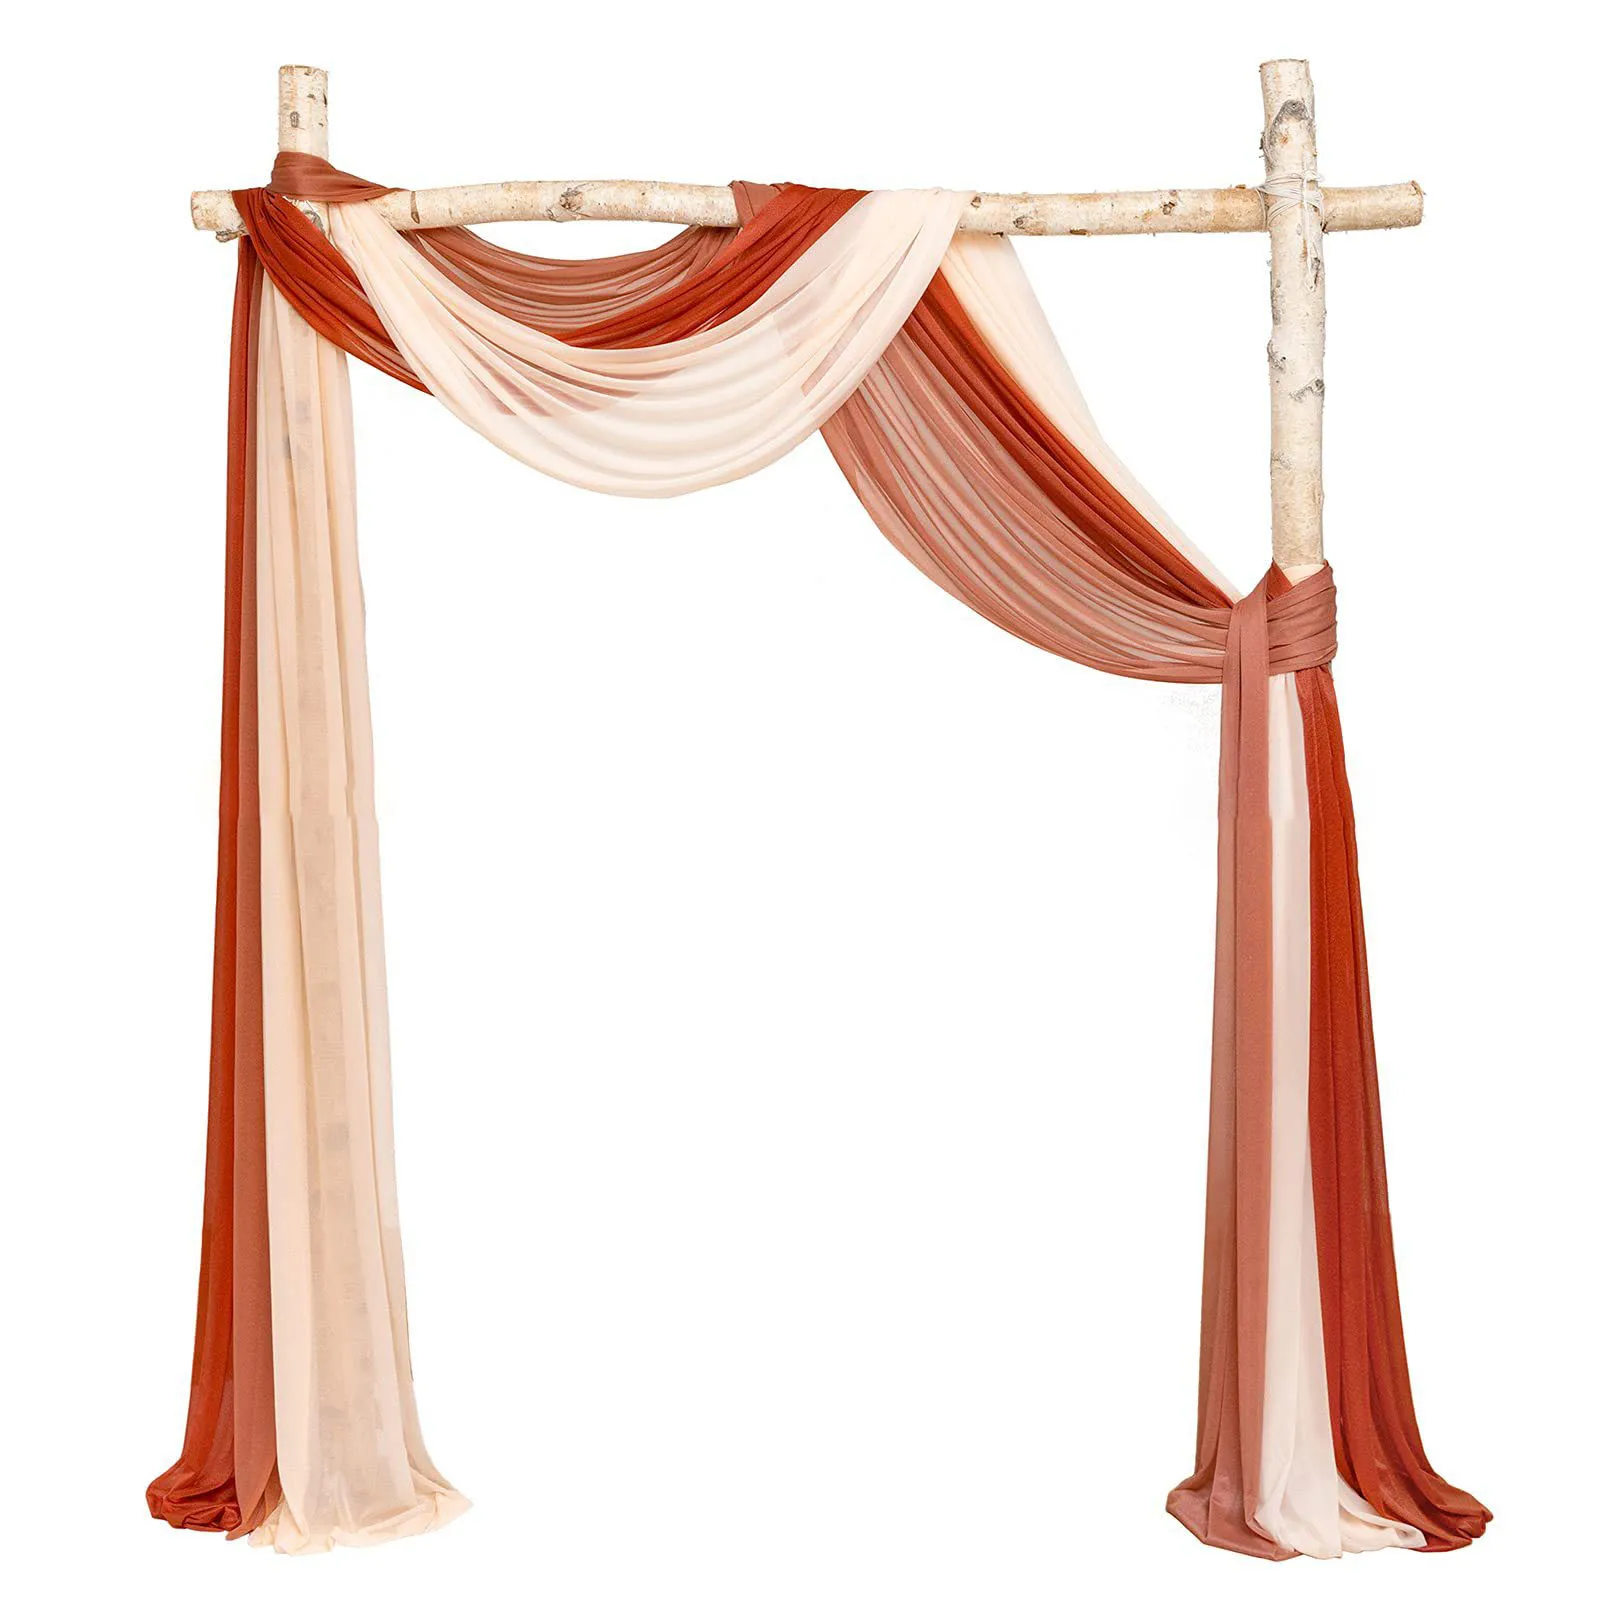 

3pcs/lot Wedding Arch Drape Fabric Sheer Chiffon Tulle Curtain Backdrop Living Home Drapery Ceremony Reception Swag Decoration